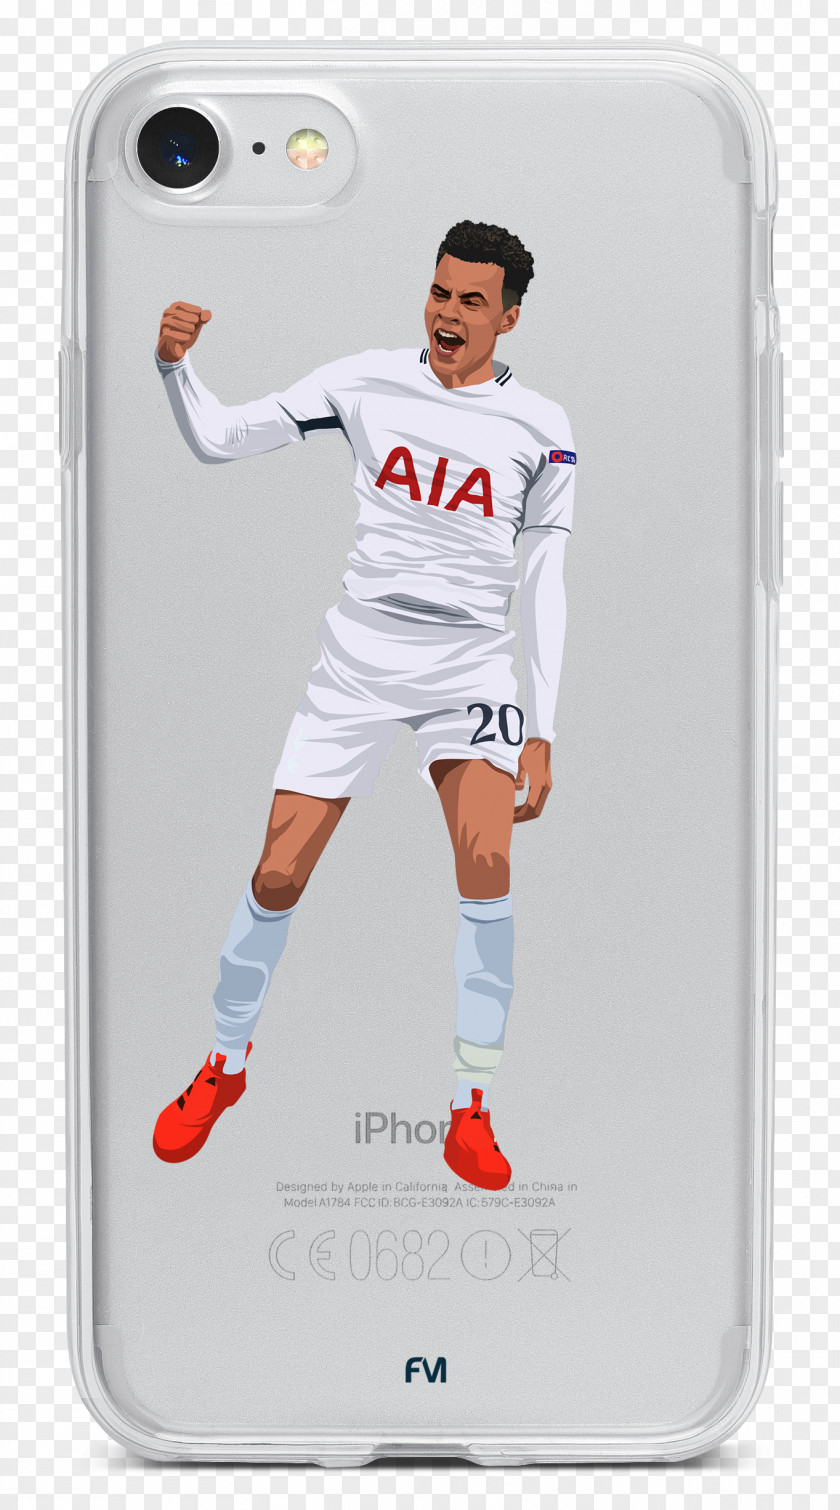 Football Apple IPhone 8 Plus 7 Mobile Phone Accessories Tottenham Hotspur F.C. PNG